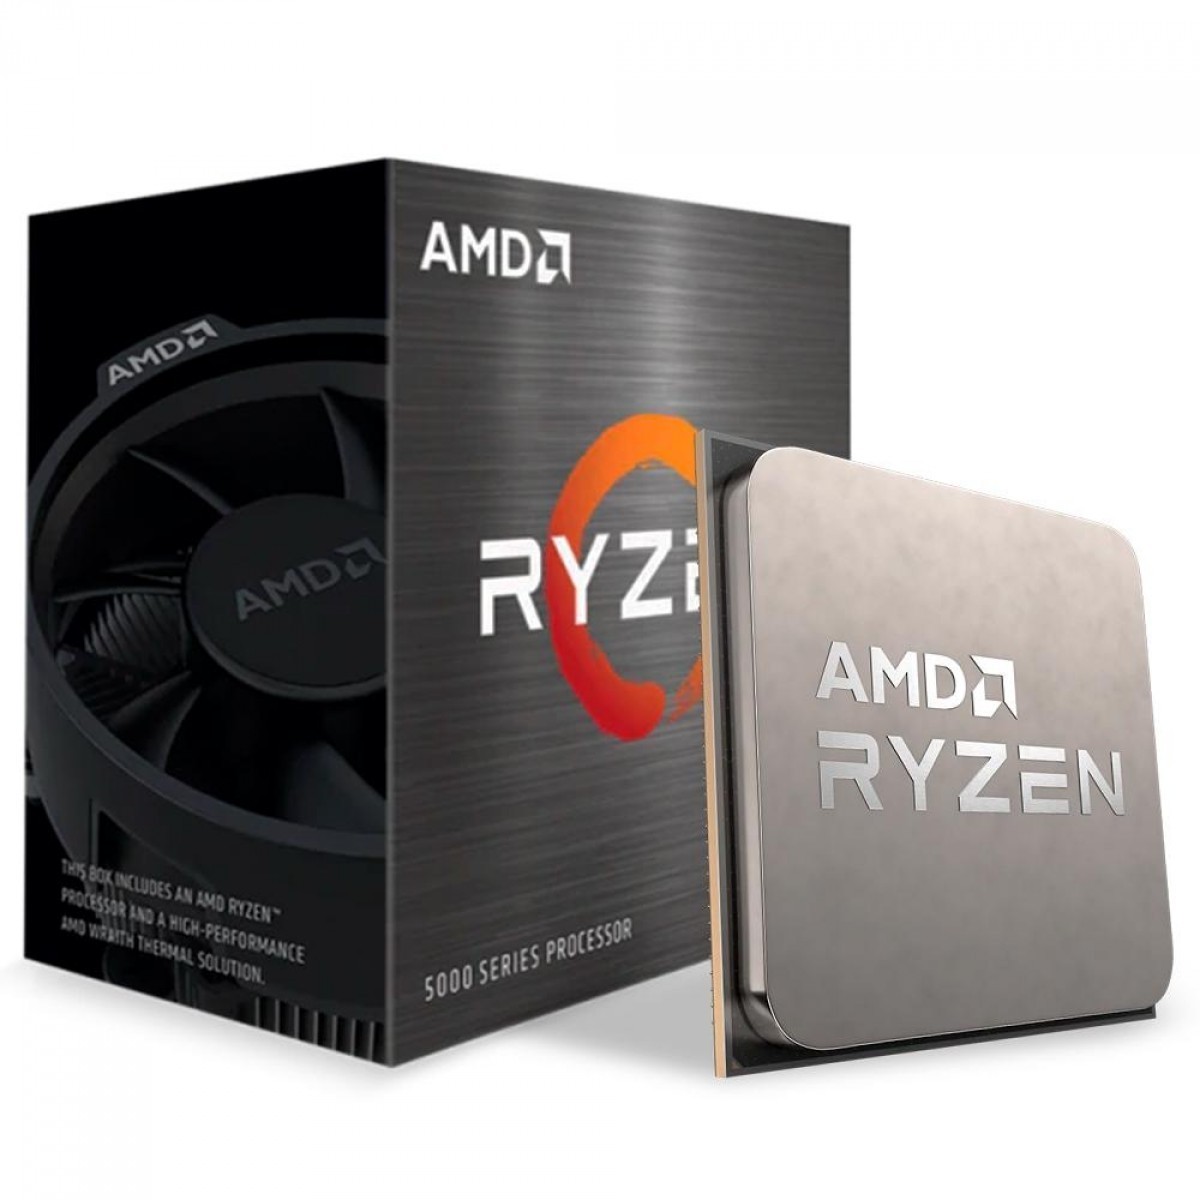 Kit Upgrade, AMD Ryzen 5 5600G, Placa Mãe MAXSUN A520M MS-Challenger, Memória DDR4 16GB